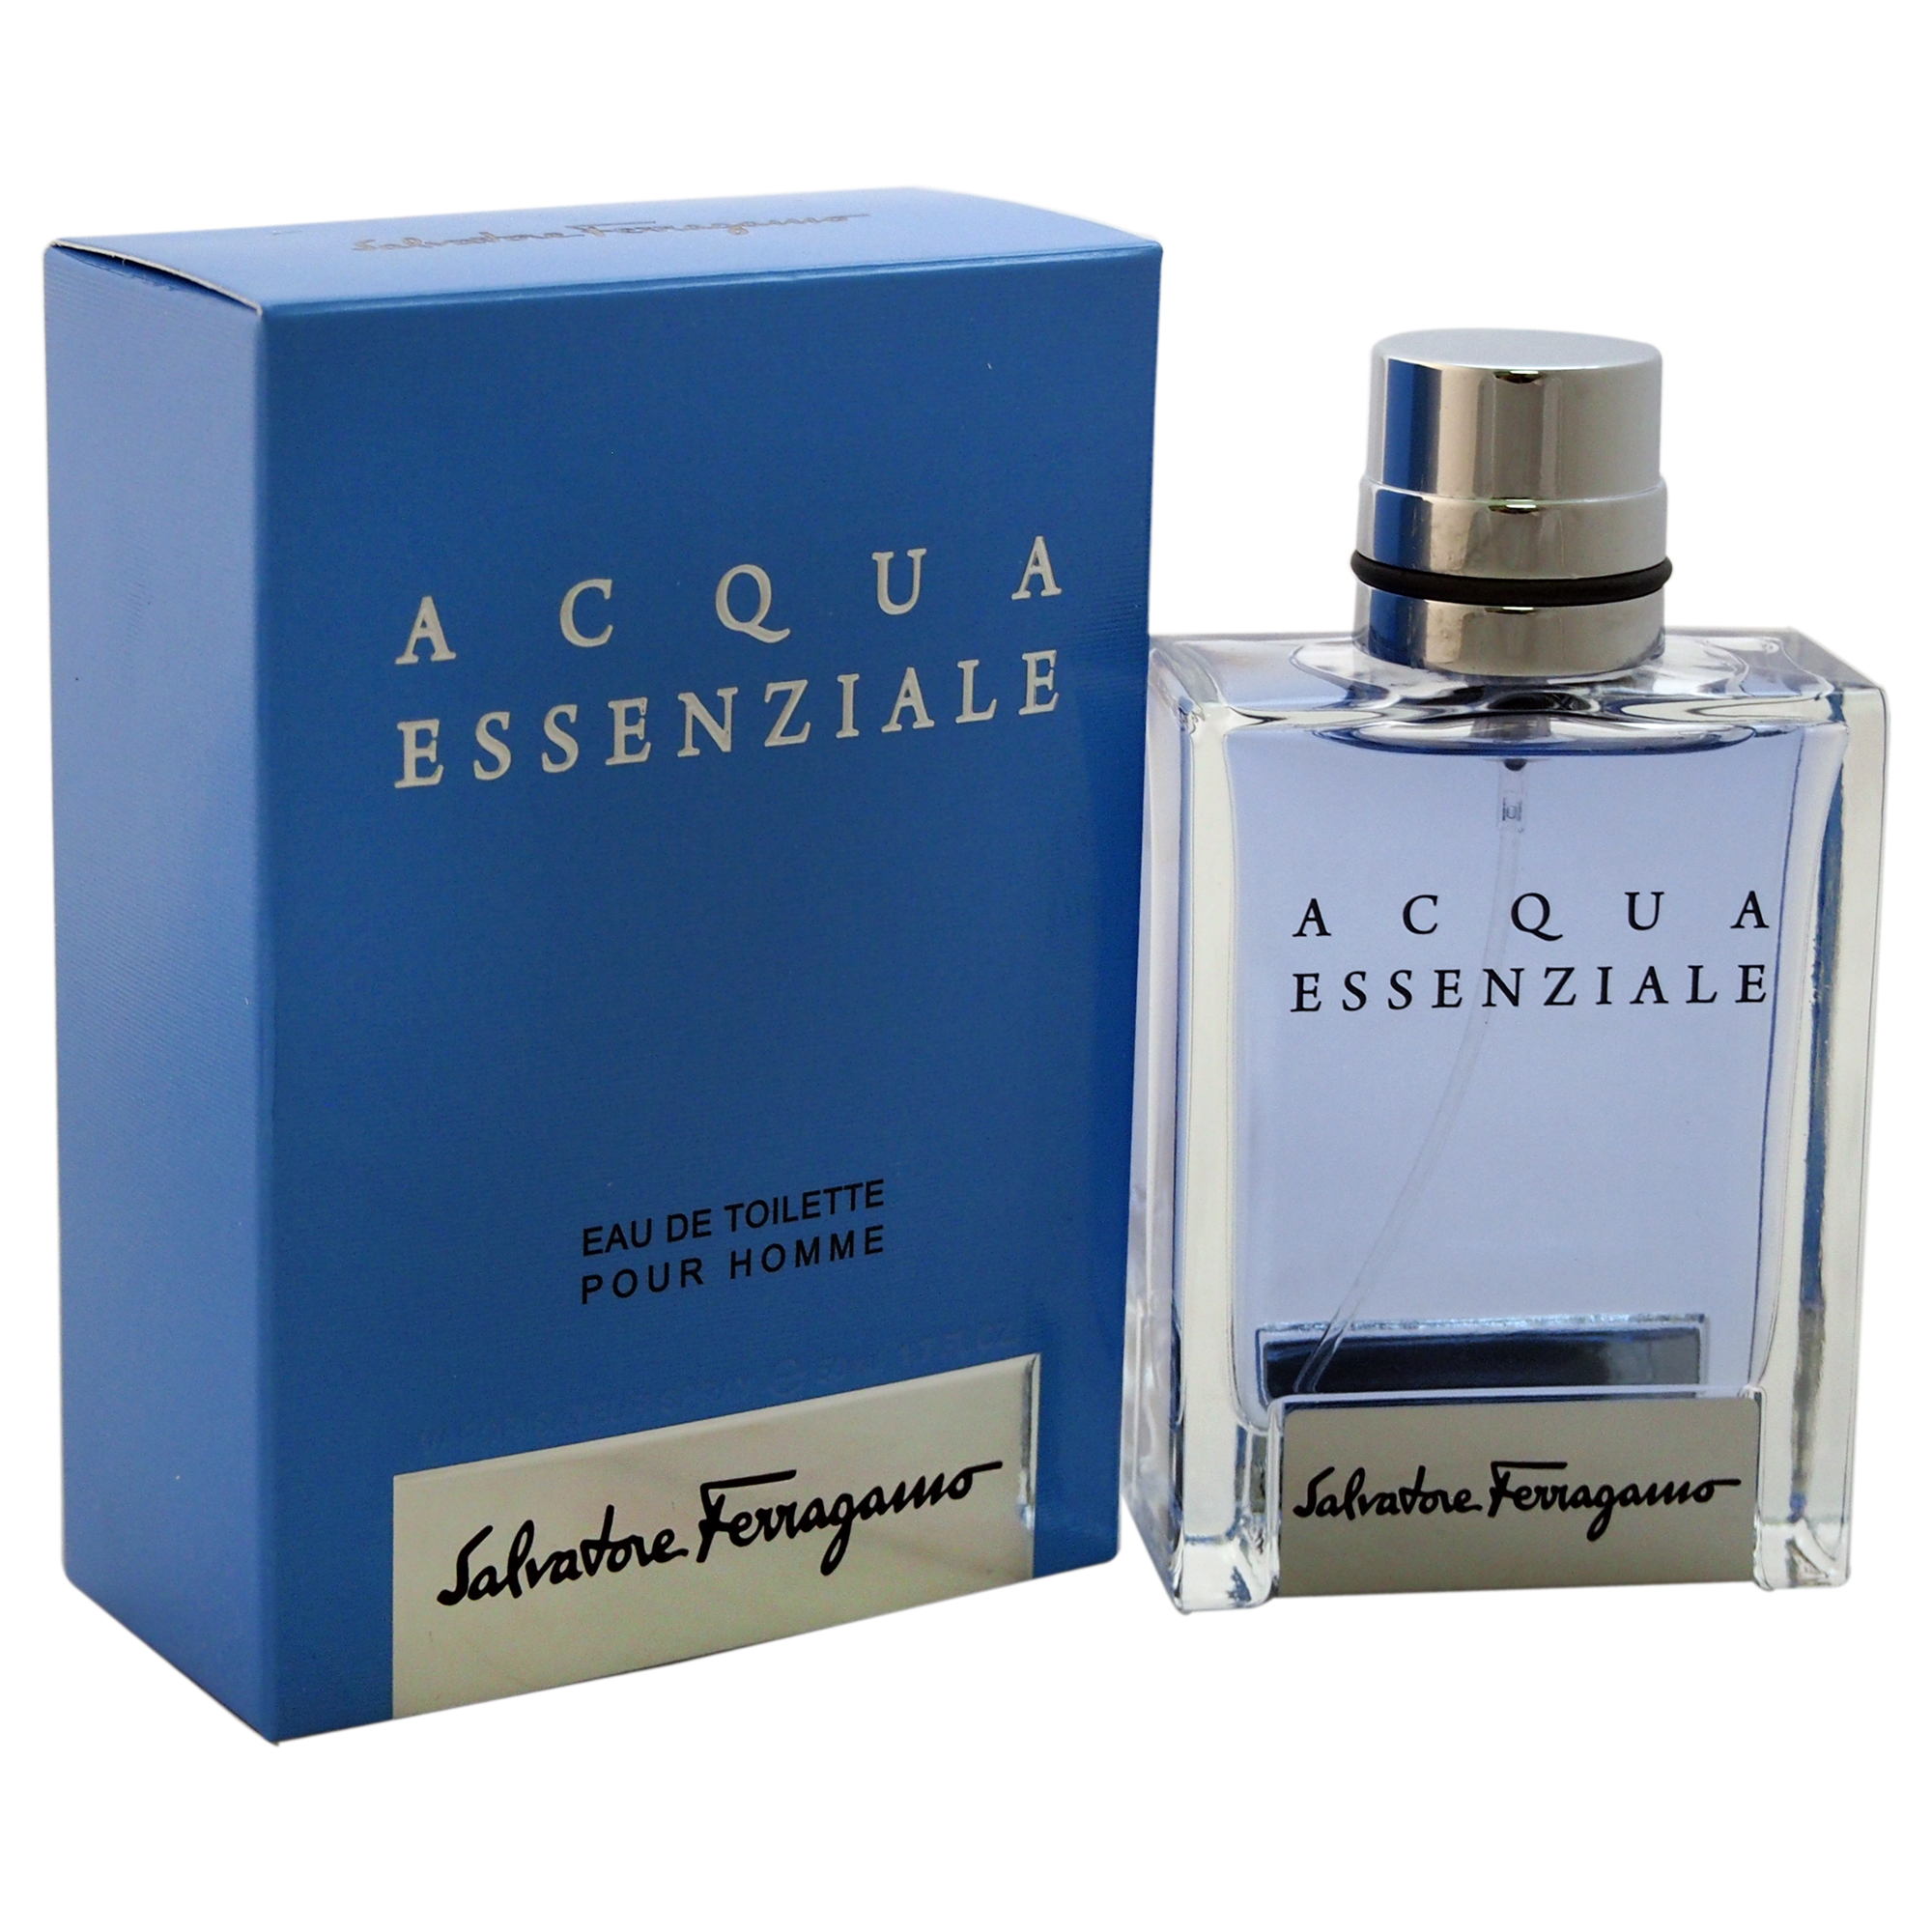 Acqua Essenziale by Salvatore Ferragamo for Men - 1.7 oz EDT Spray